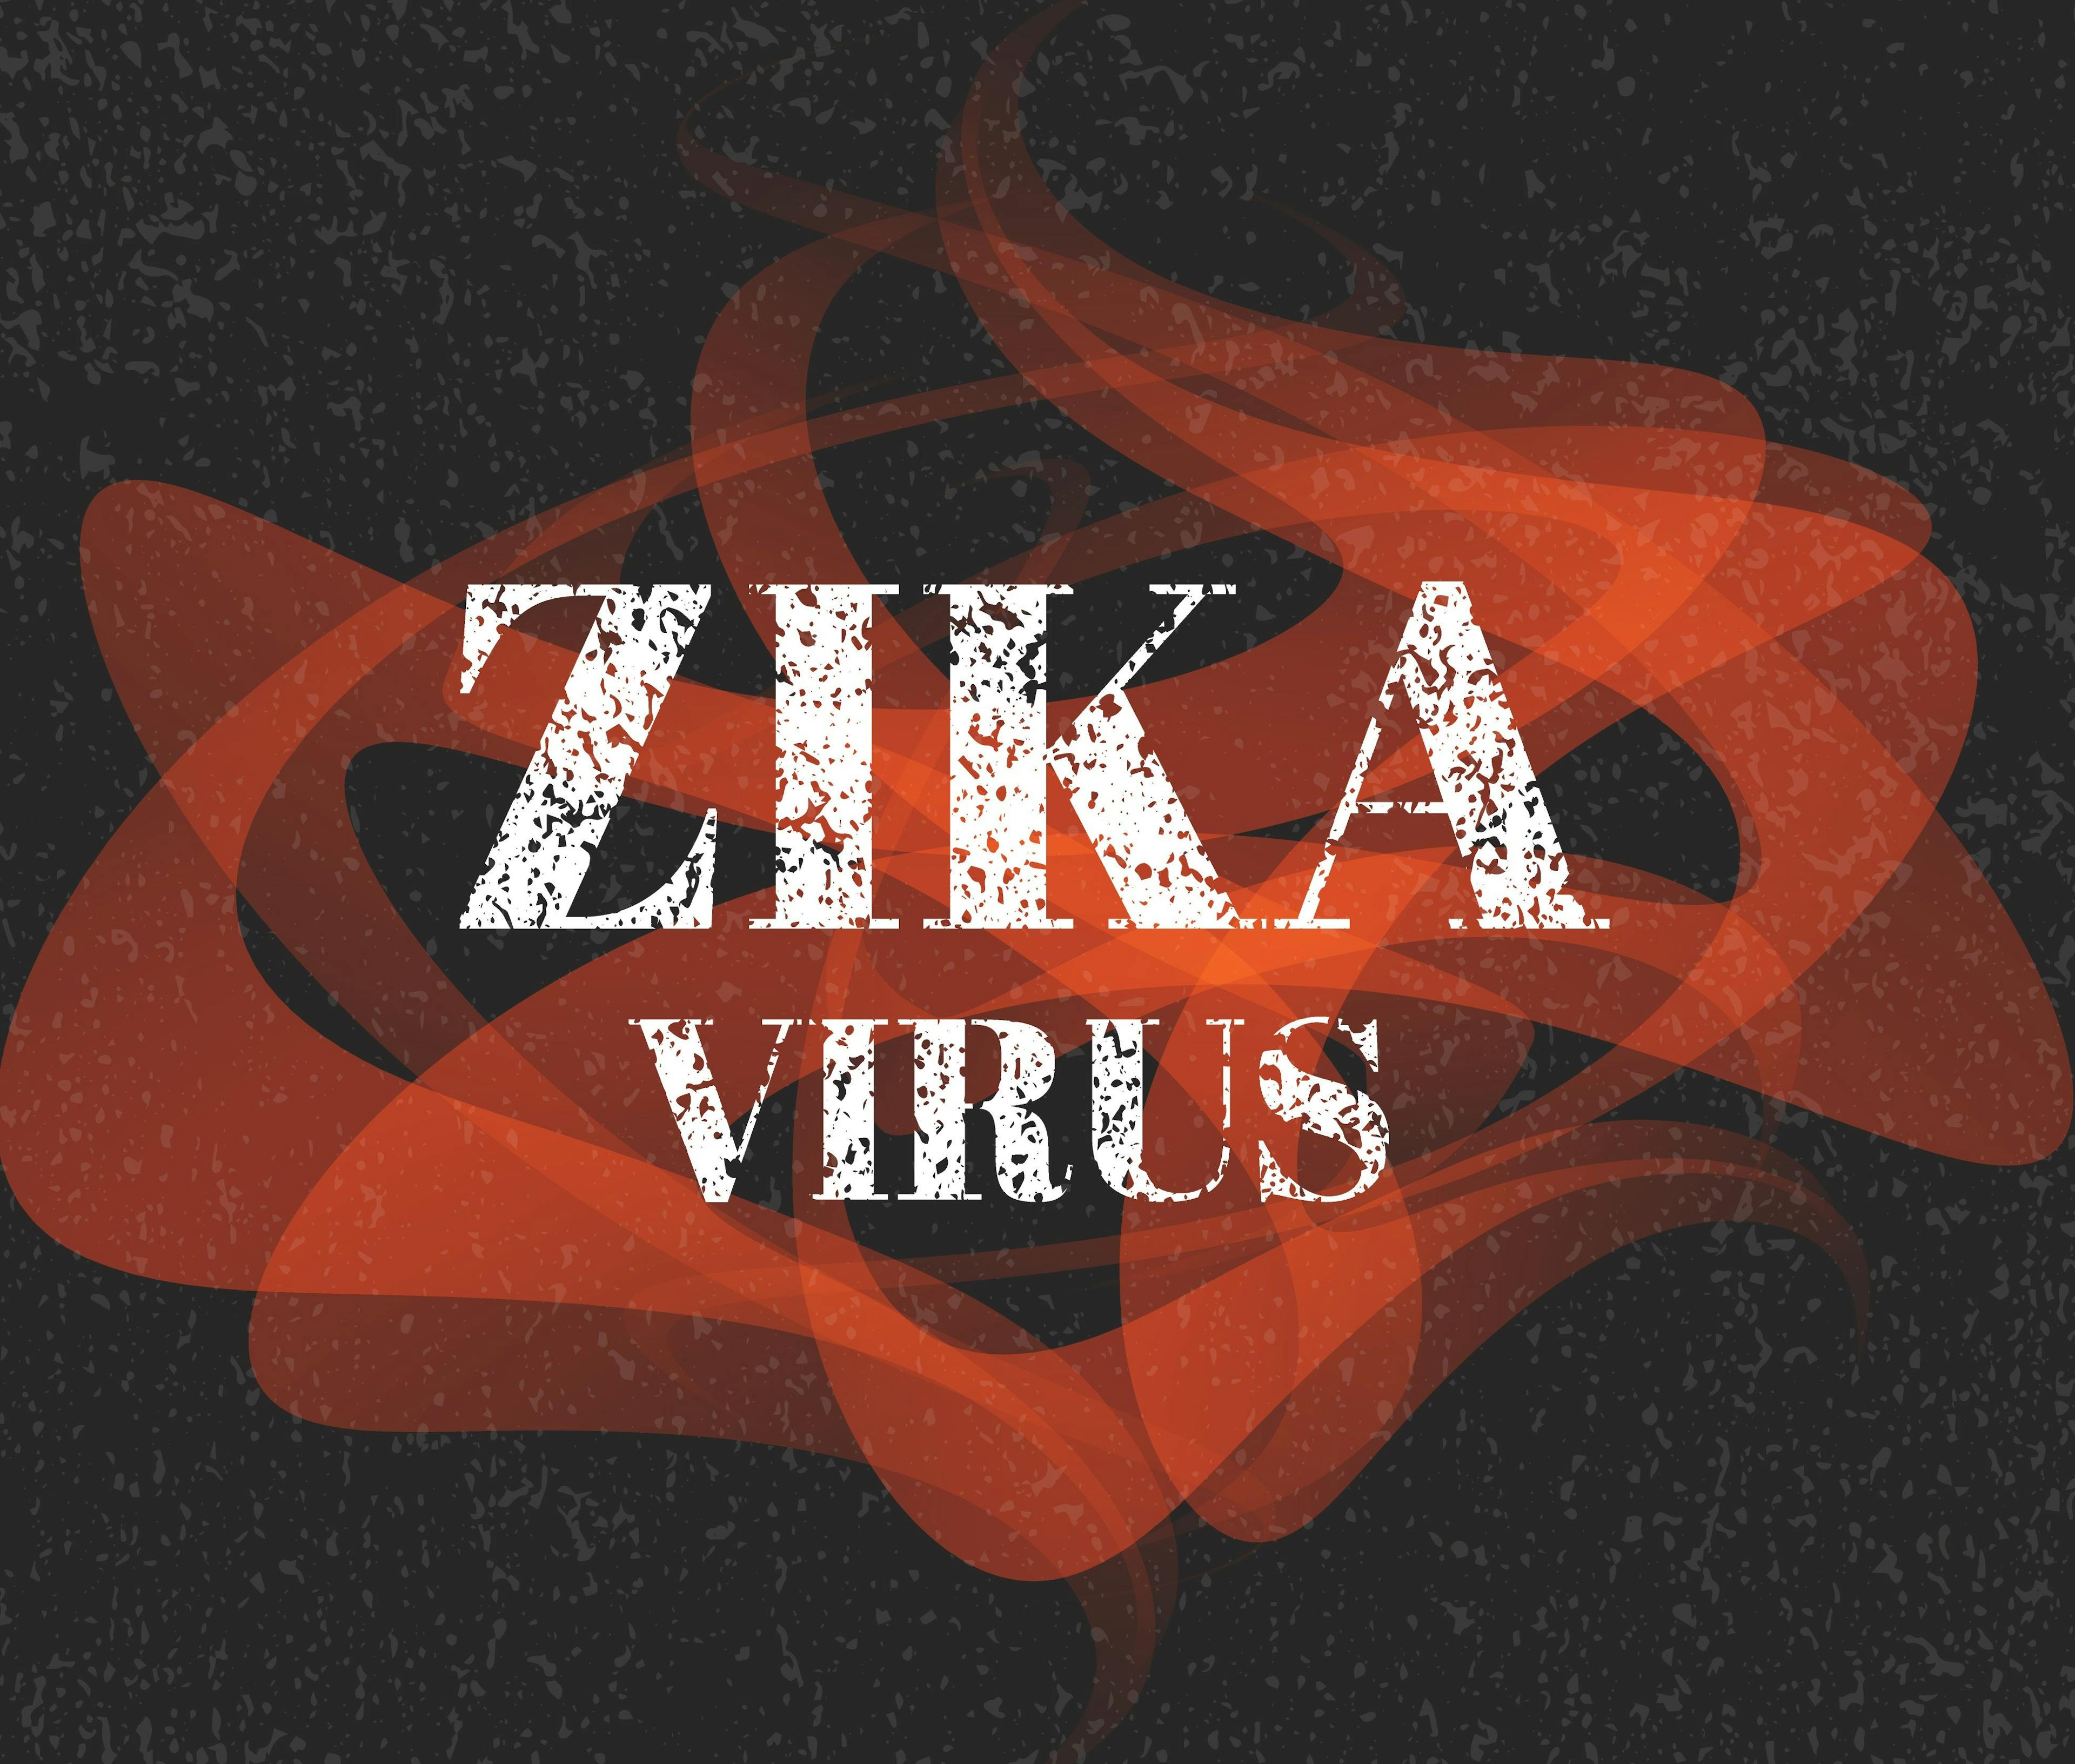 Role of the Neurologist in Zika Virus Management